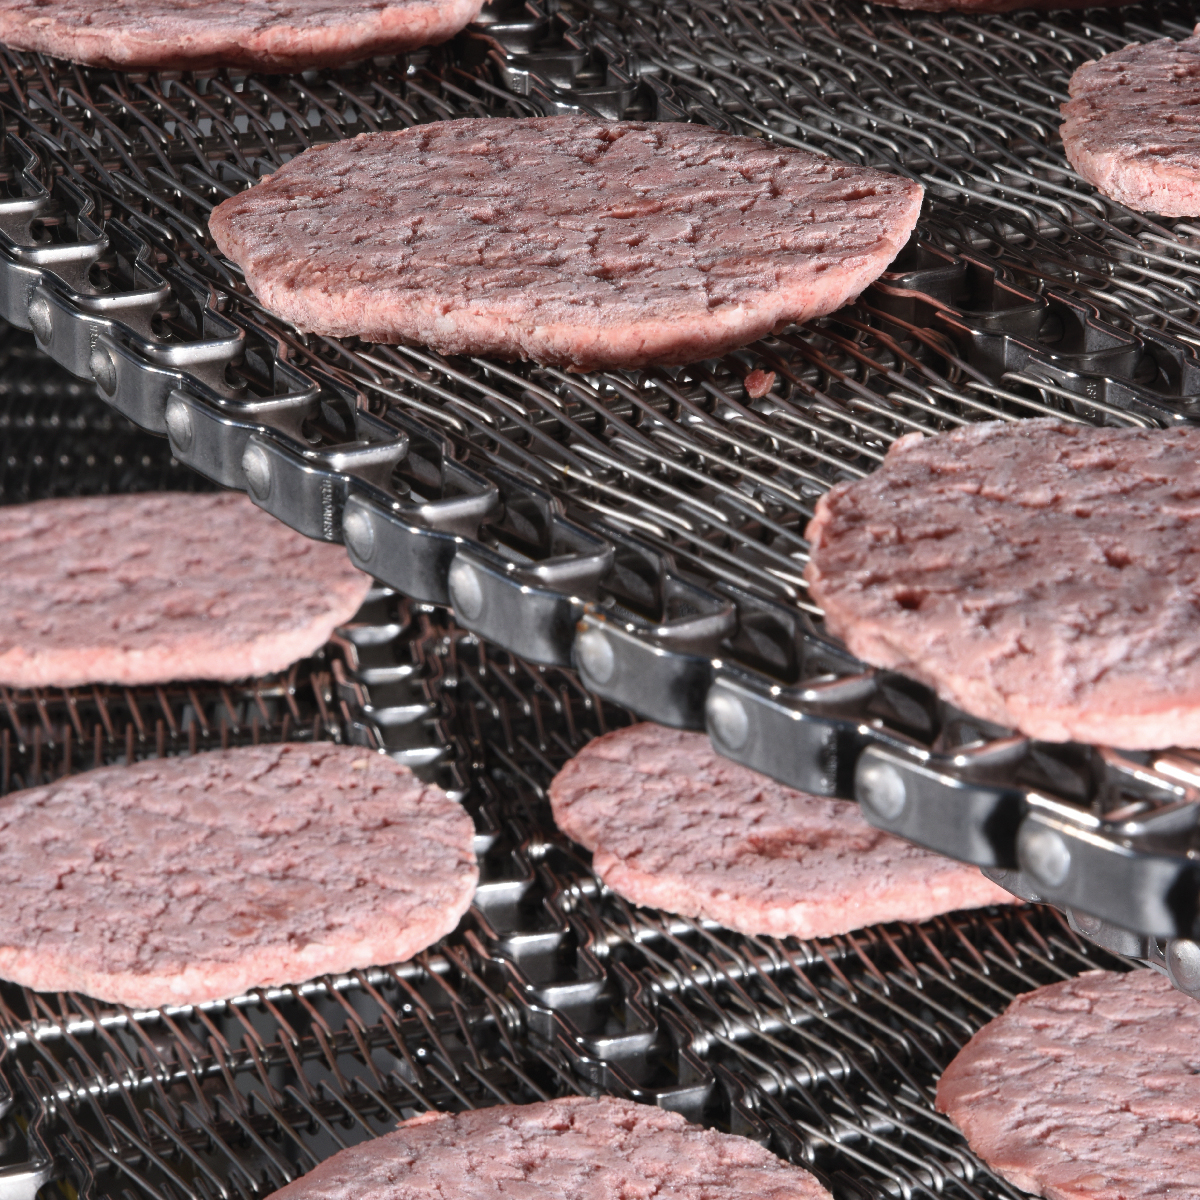 Ashworth Spiral Freezer Conveyor with raw burger patties sitting on the conveyor belt